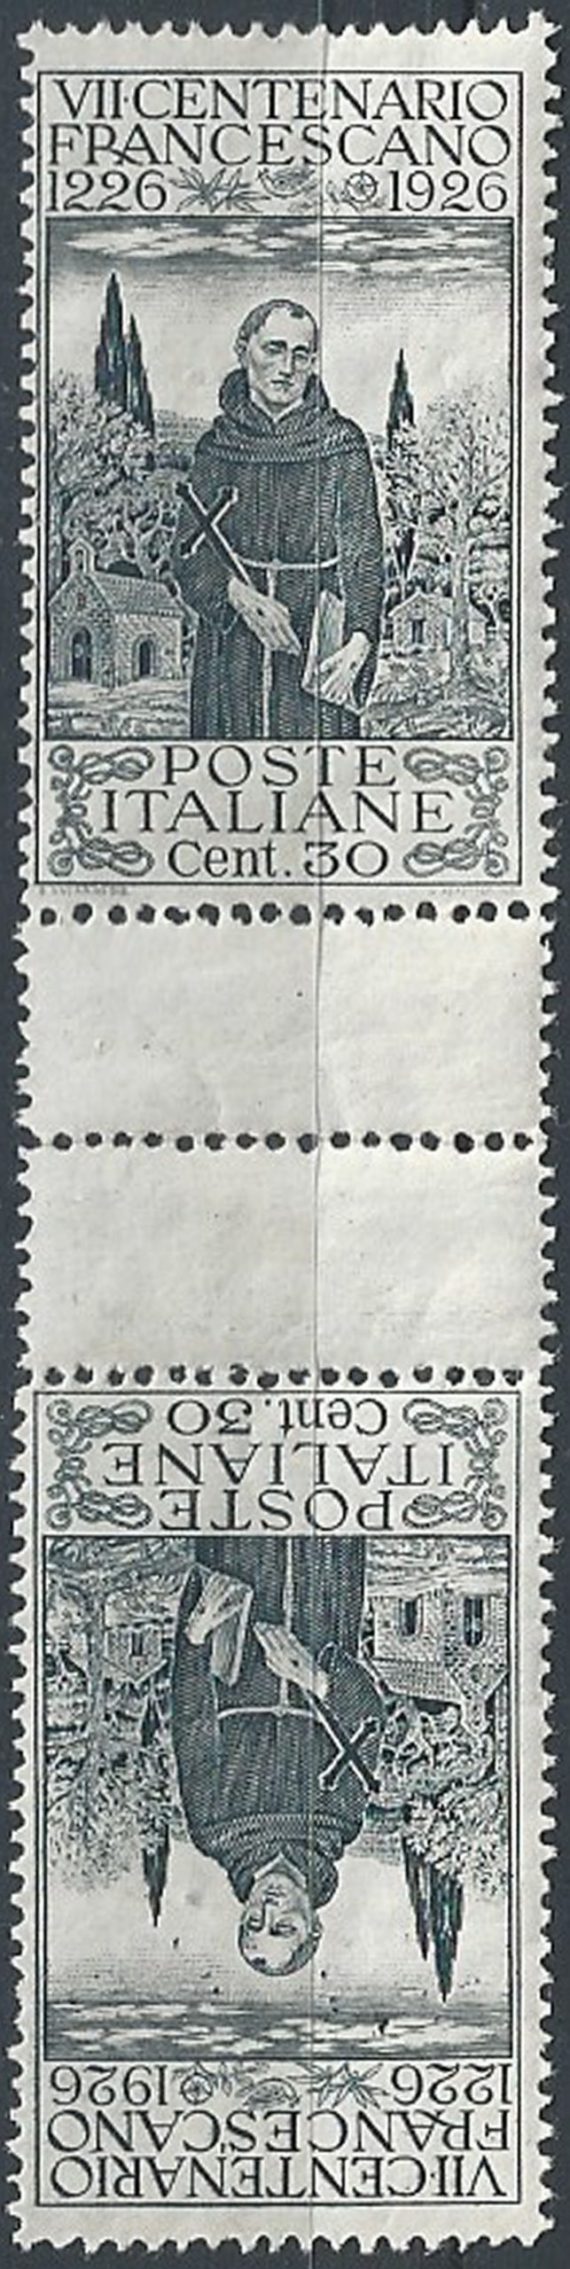 1926 Italia San Francesco 30c. tete-beche MNH Sassone n. 193